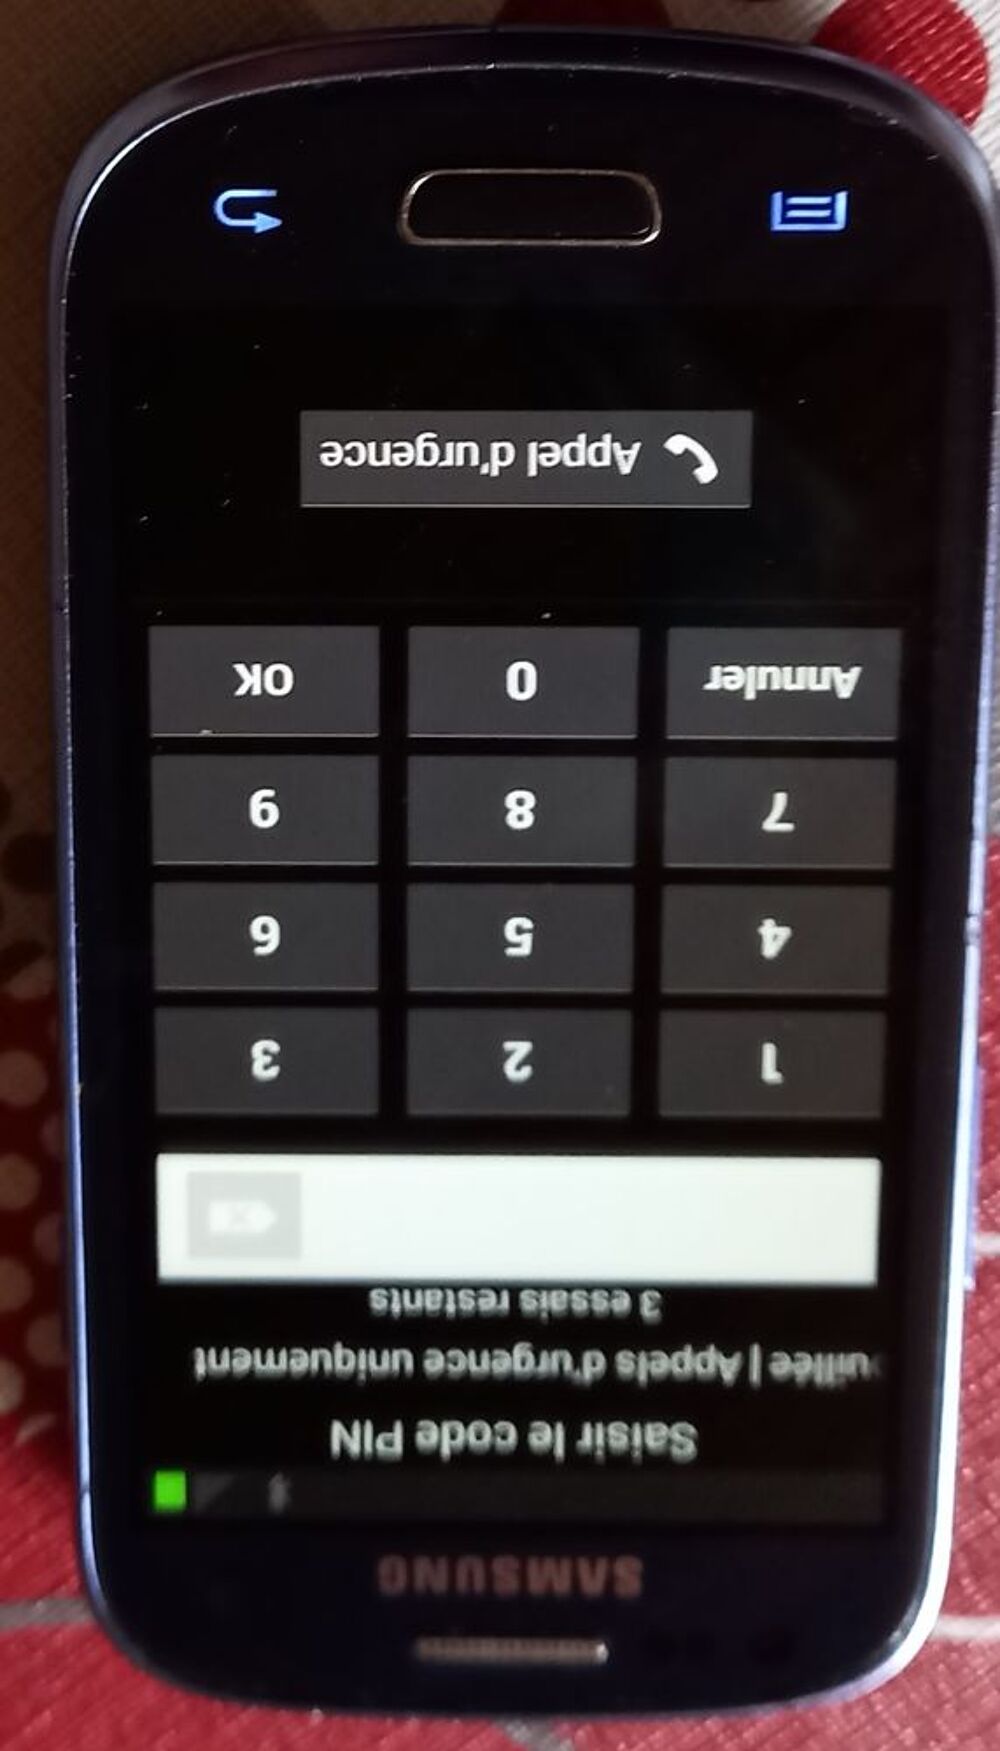 Mini Smartphone Samsung Galaxy S3 mini HT-I8190 noir
Tlphones et tablettes